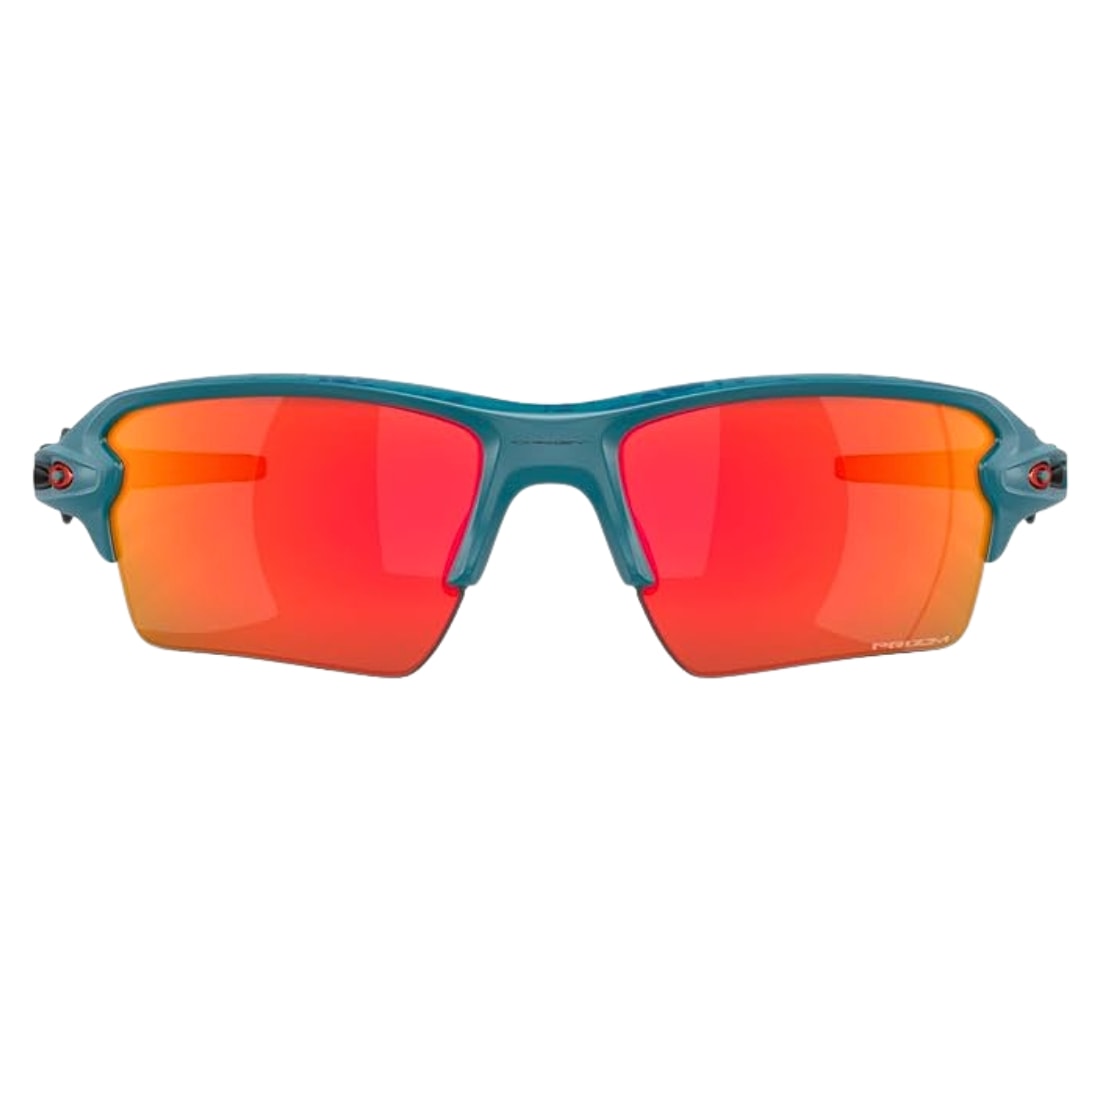 Oakley Flak 2.0 XL Sunglasses - Mattle Balsam/Prizm Ruby